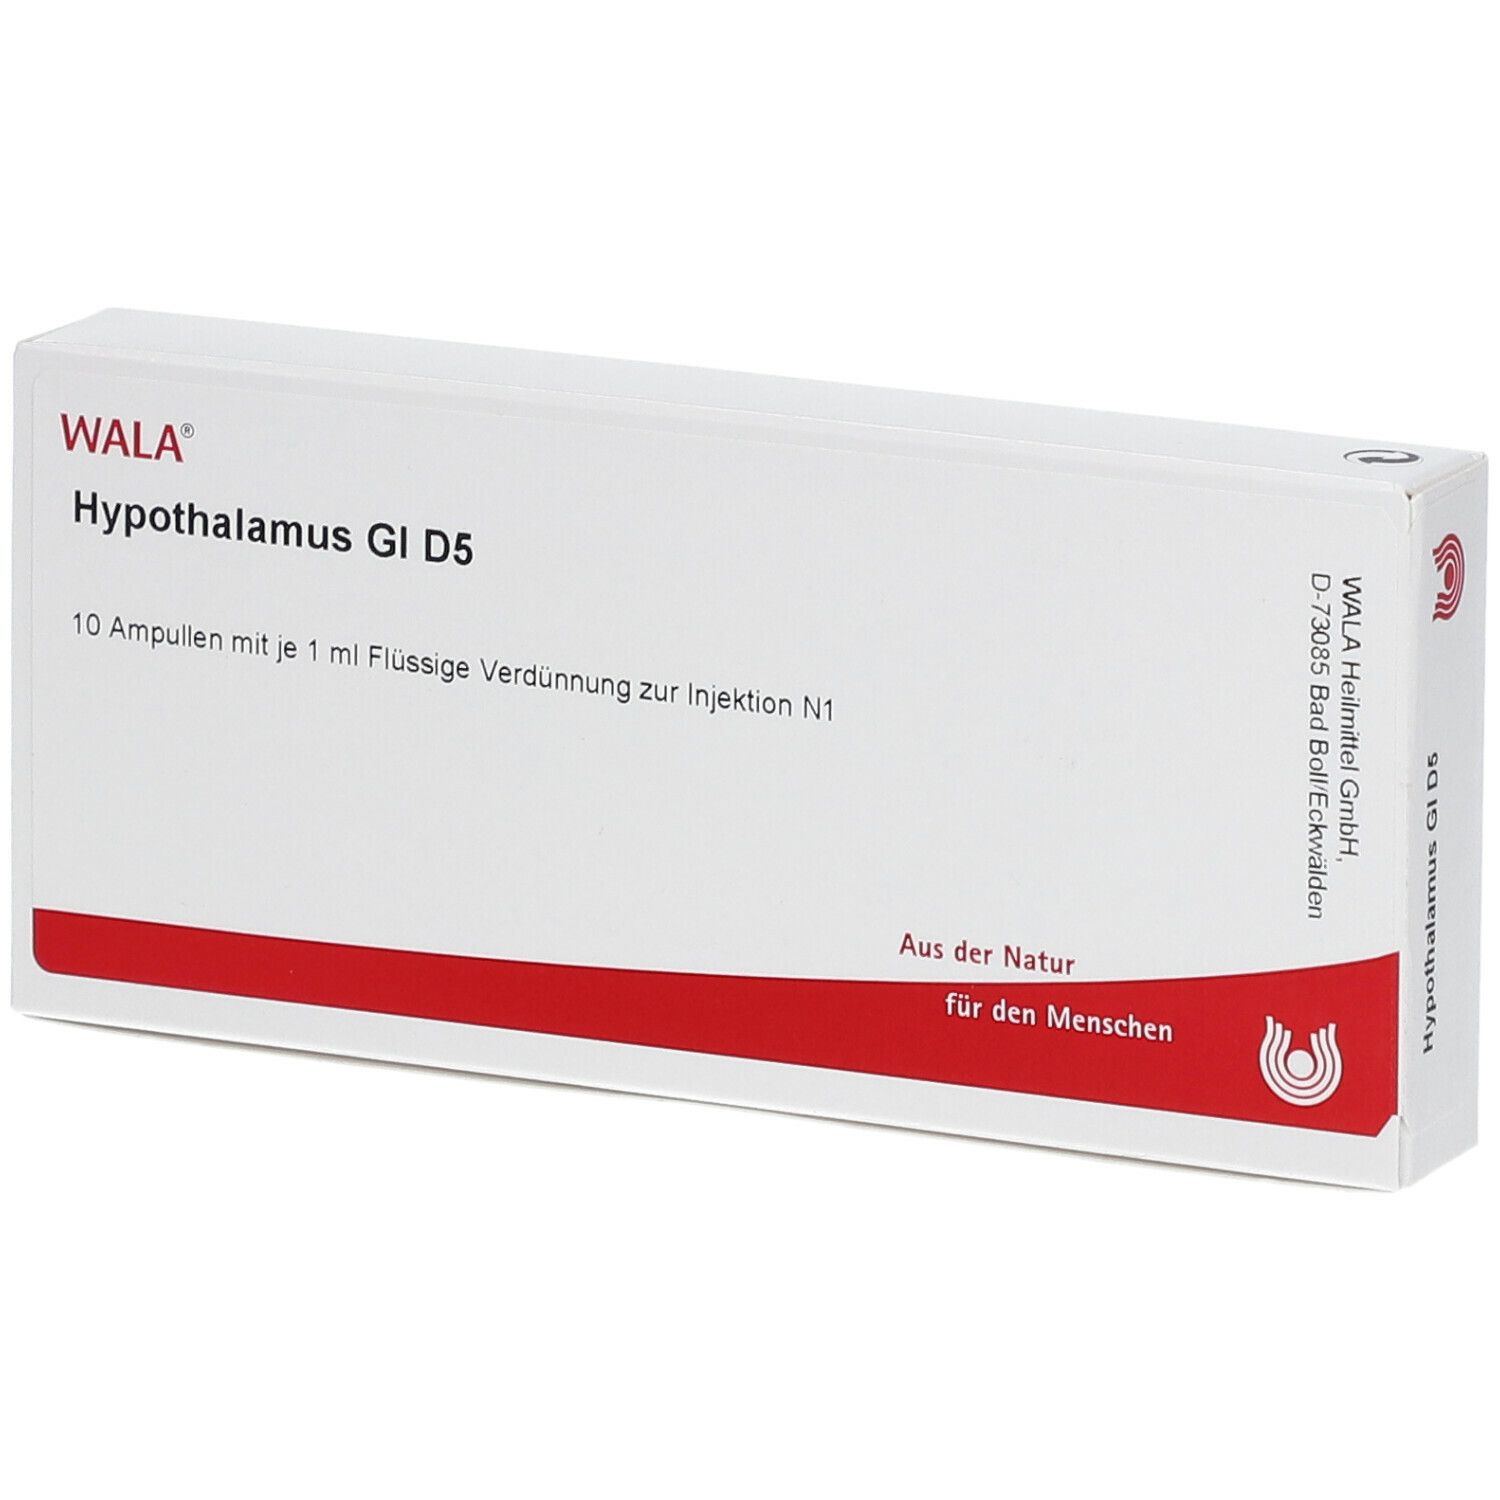 Wala® Hypothalamus Gl D 5